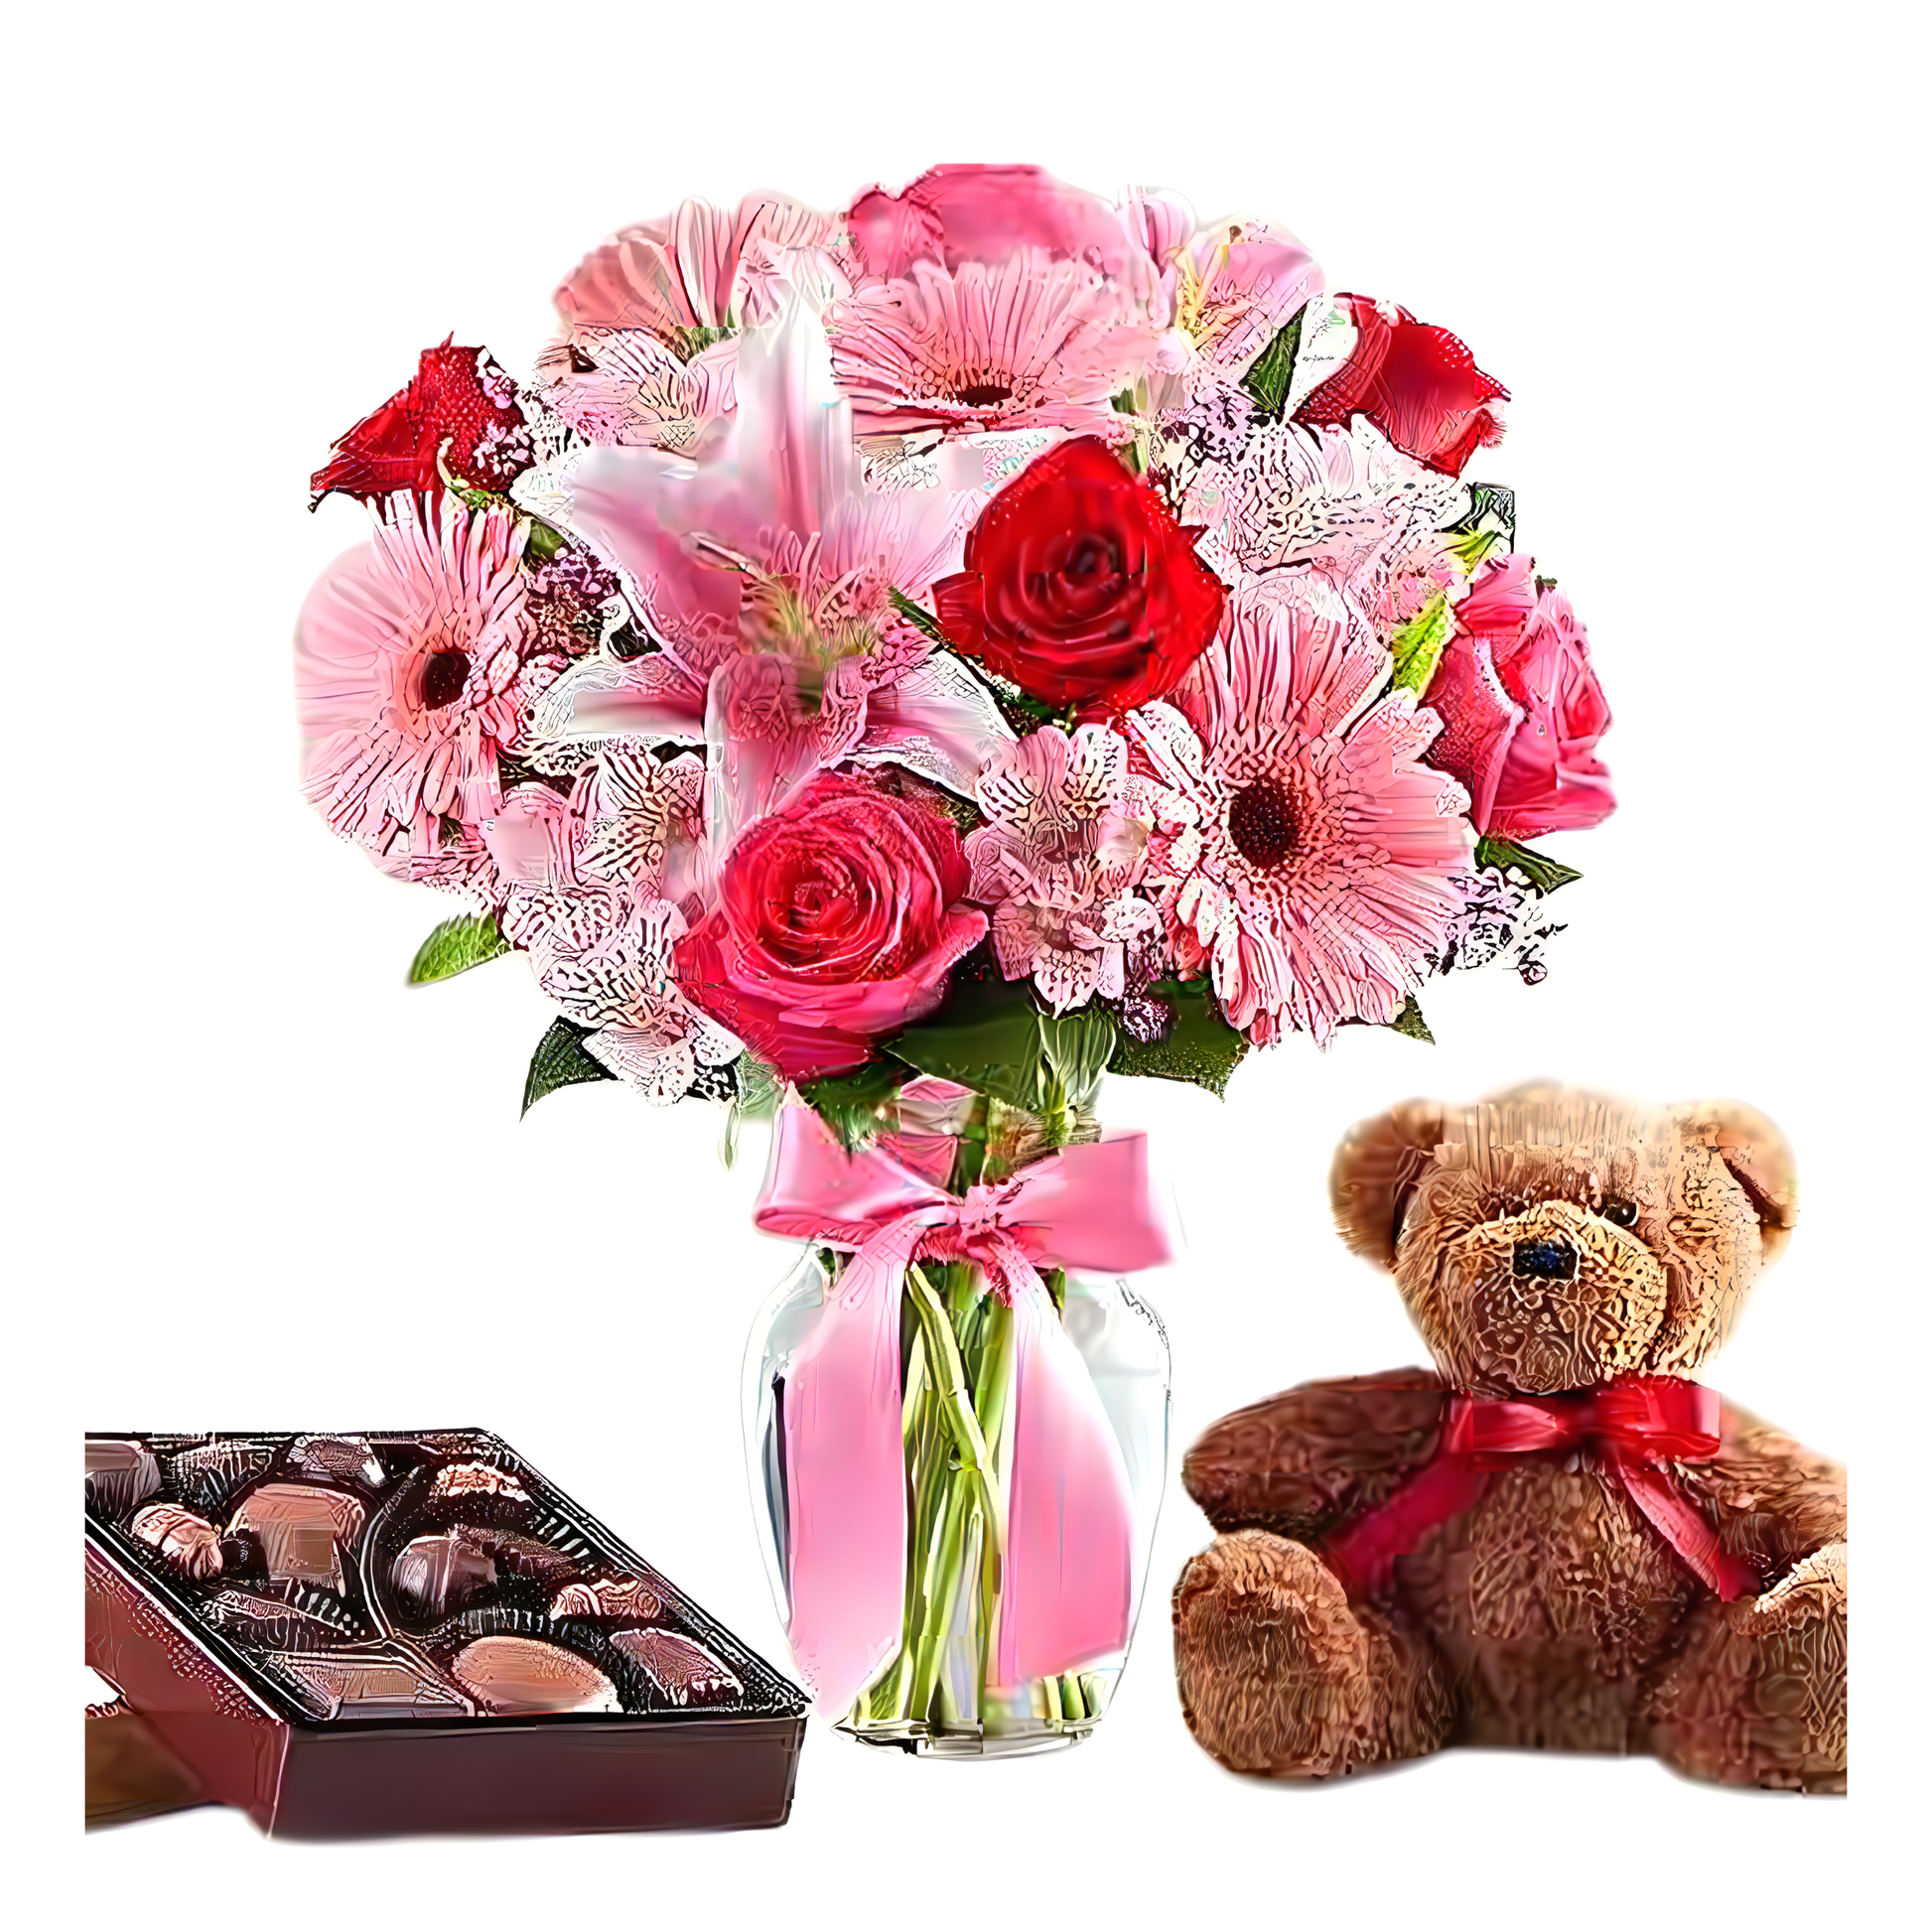 My Valentine's Love With Teddy Bear & Chocolates - Valentine's Day